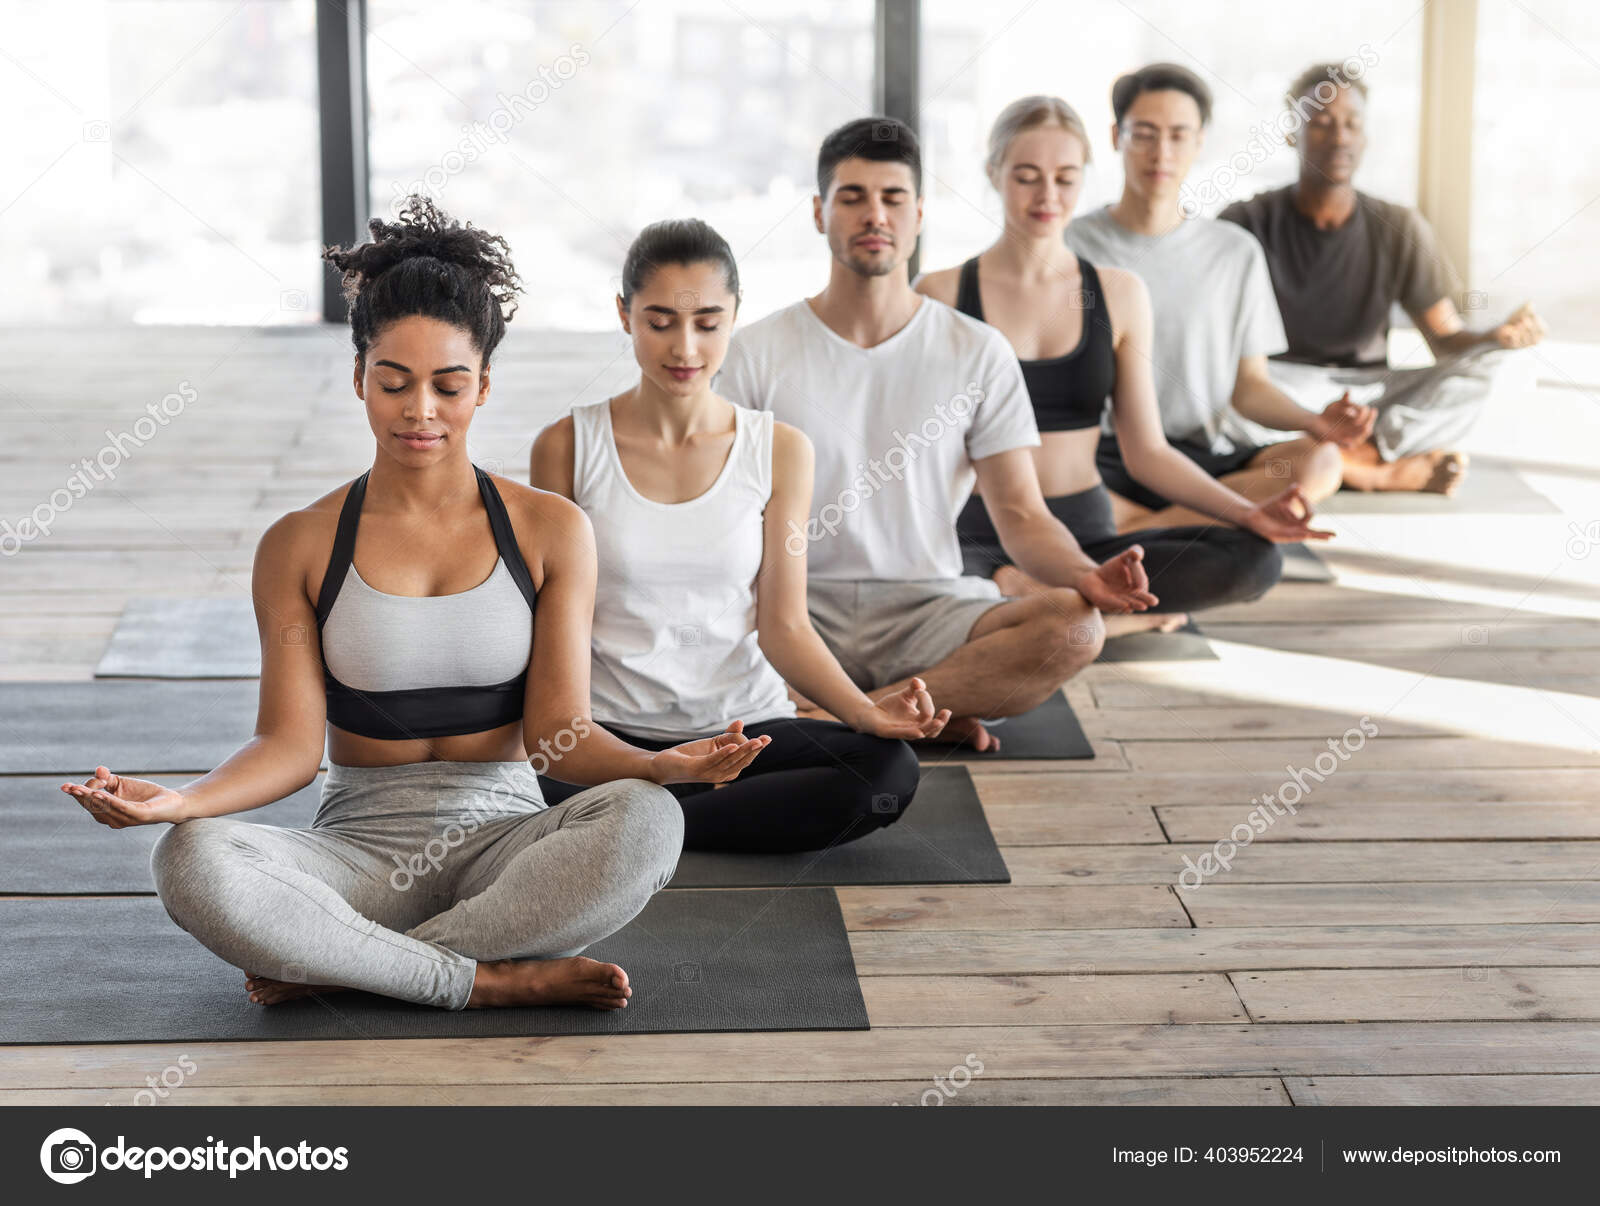 https://st4.depositphotos.com/4218696/40395/i/1600/depositphotos_403952224-stock-photo-meditation-class-group-of-fit.jpg